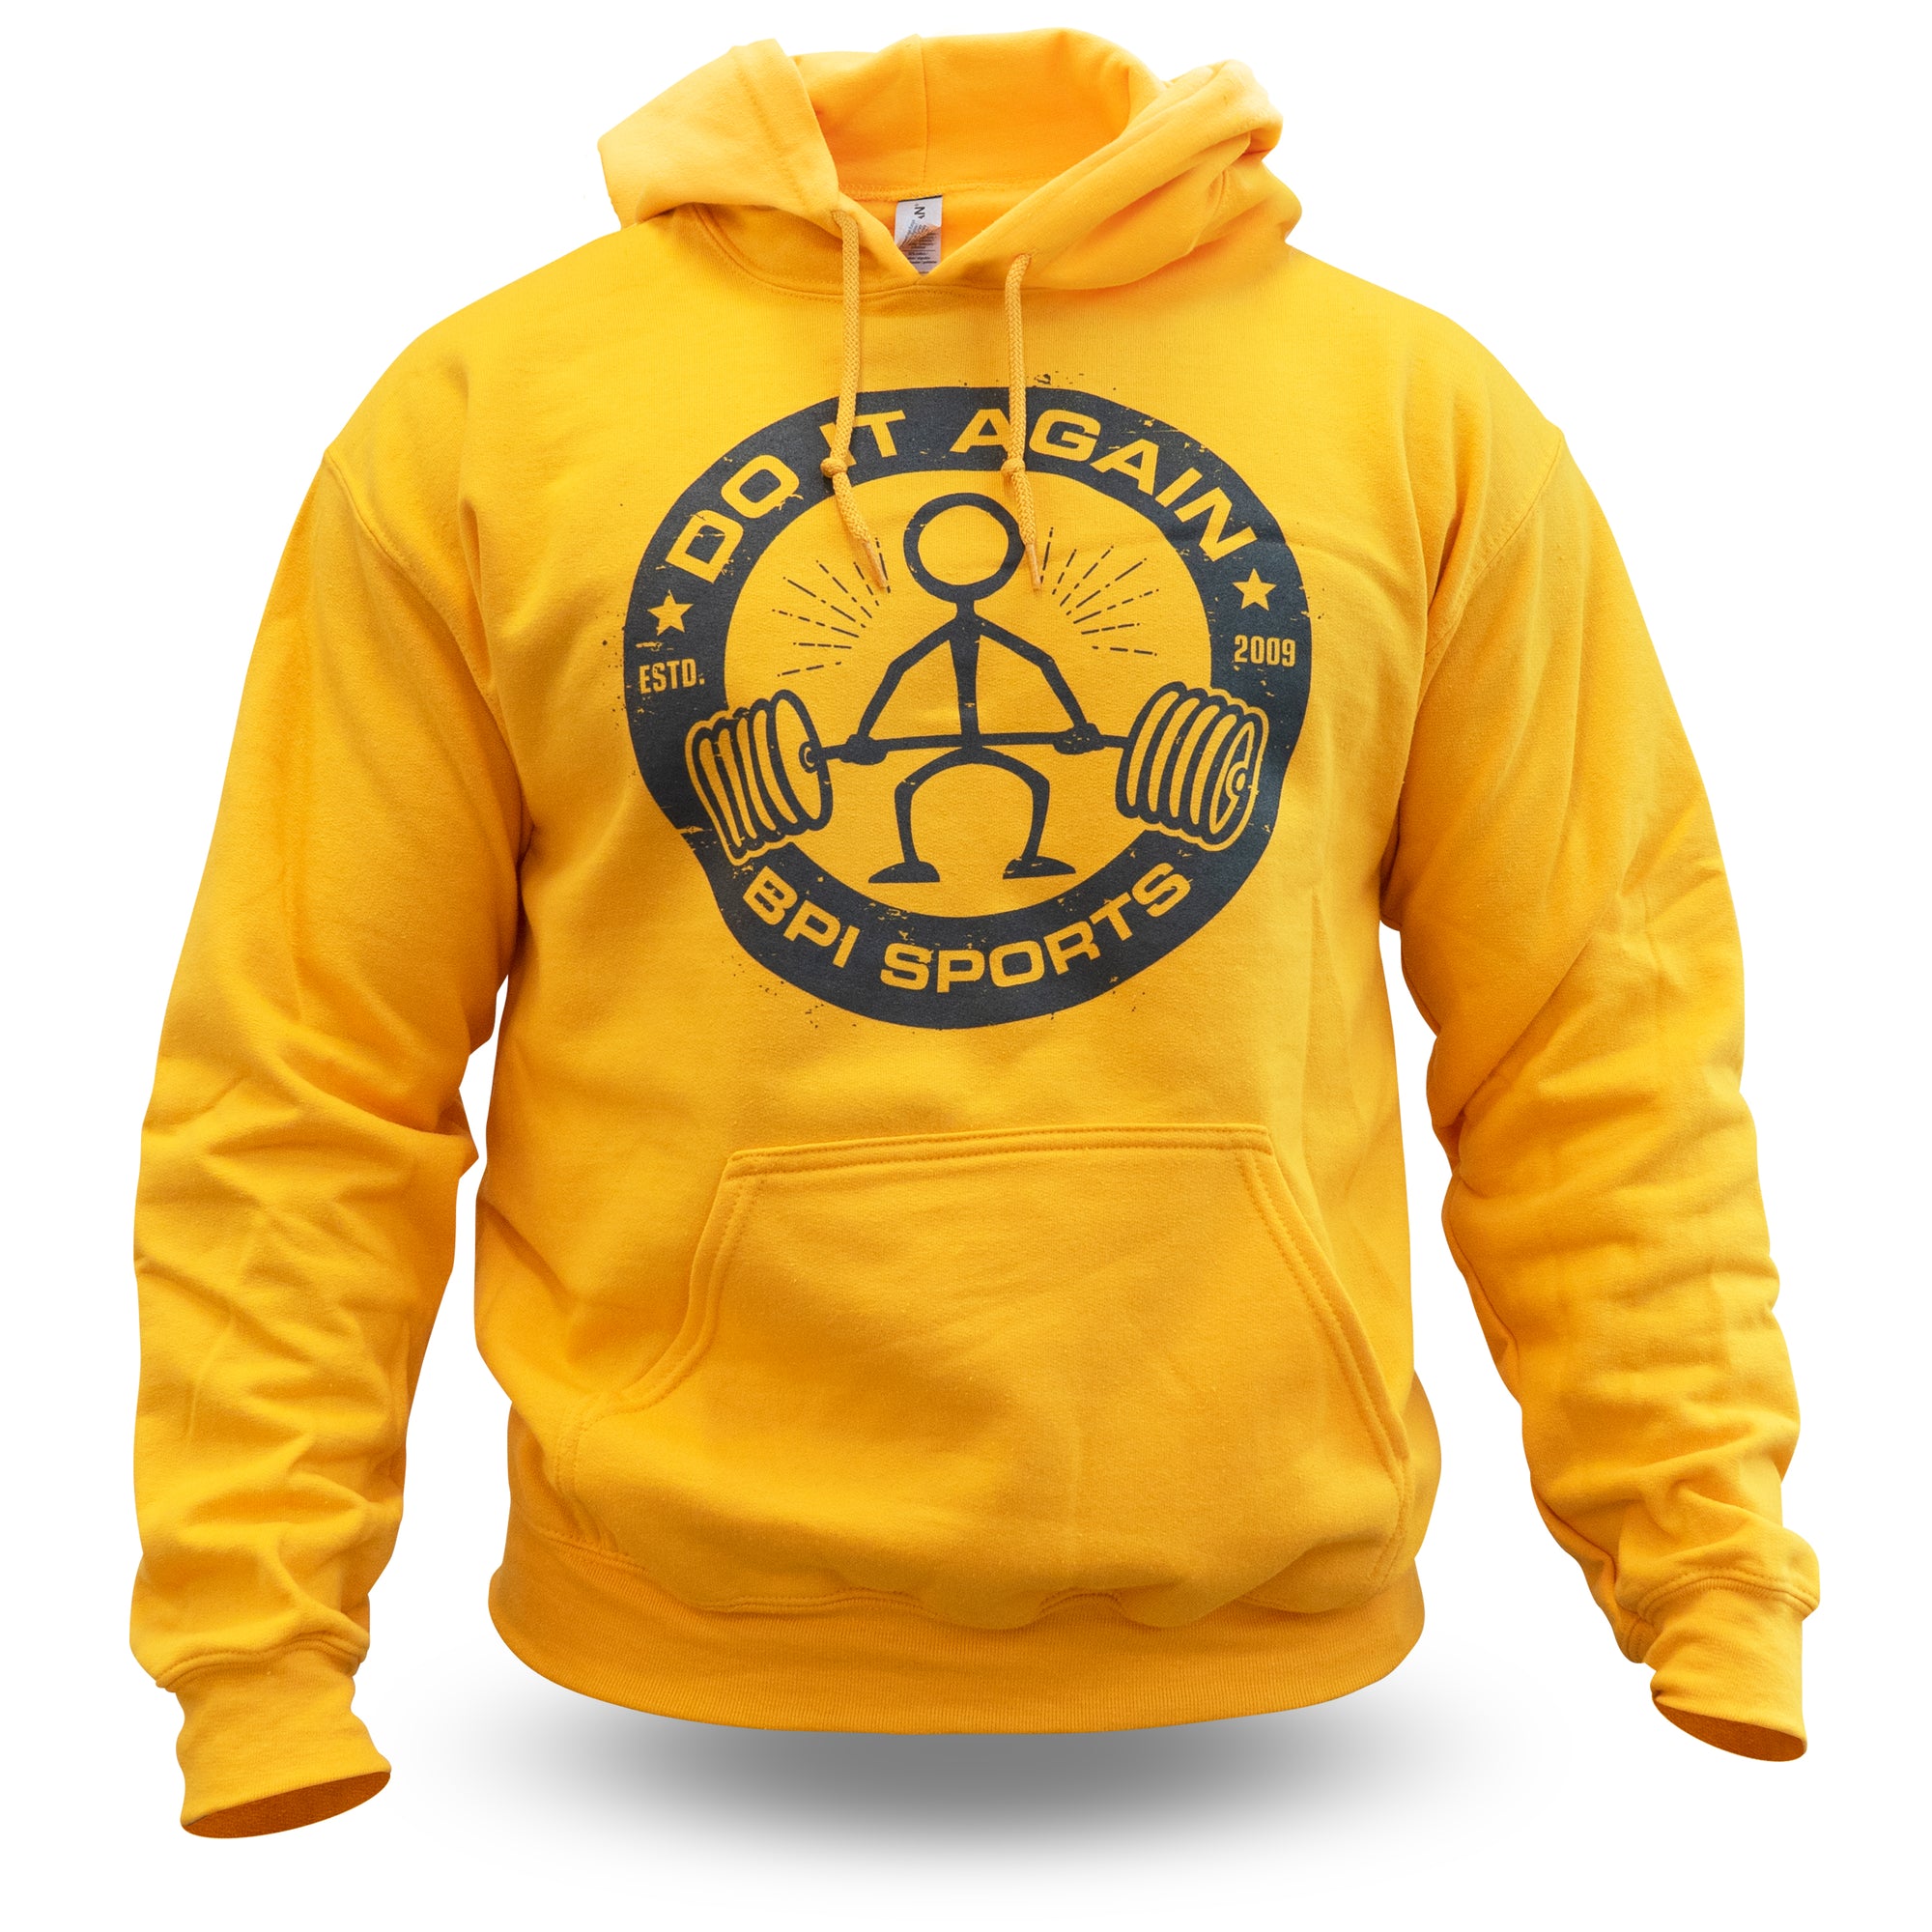 Yellow Hoodie. Do it again bpi sports logo.